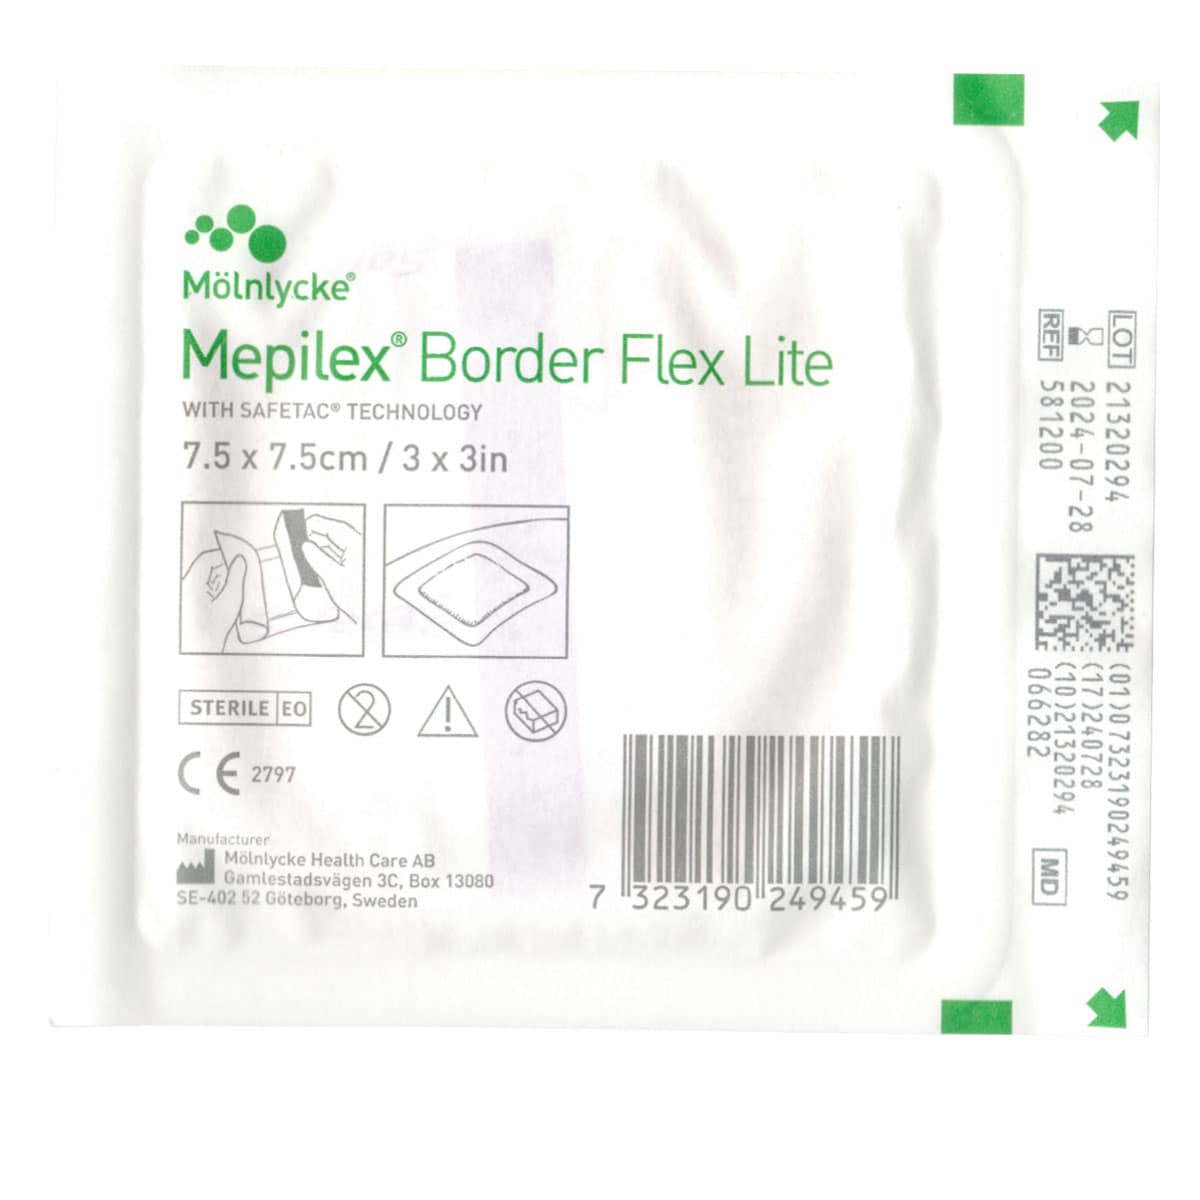 Mepilex Border Flex Lite Wound Dressing 581200 7.5cm x 7.5cm Single